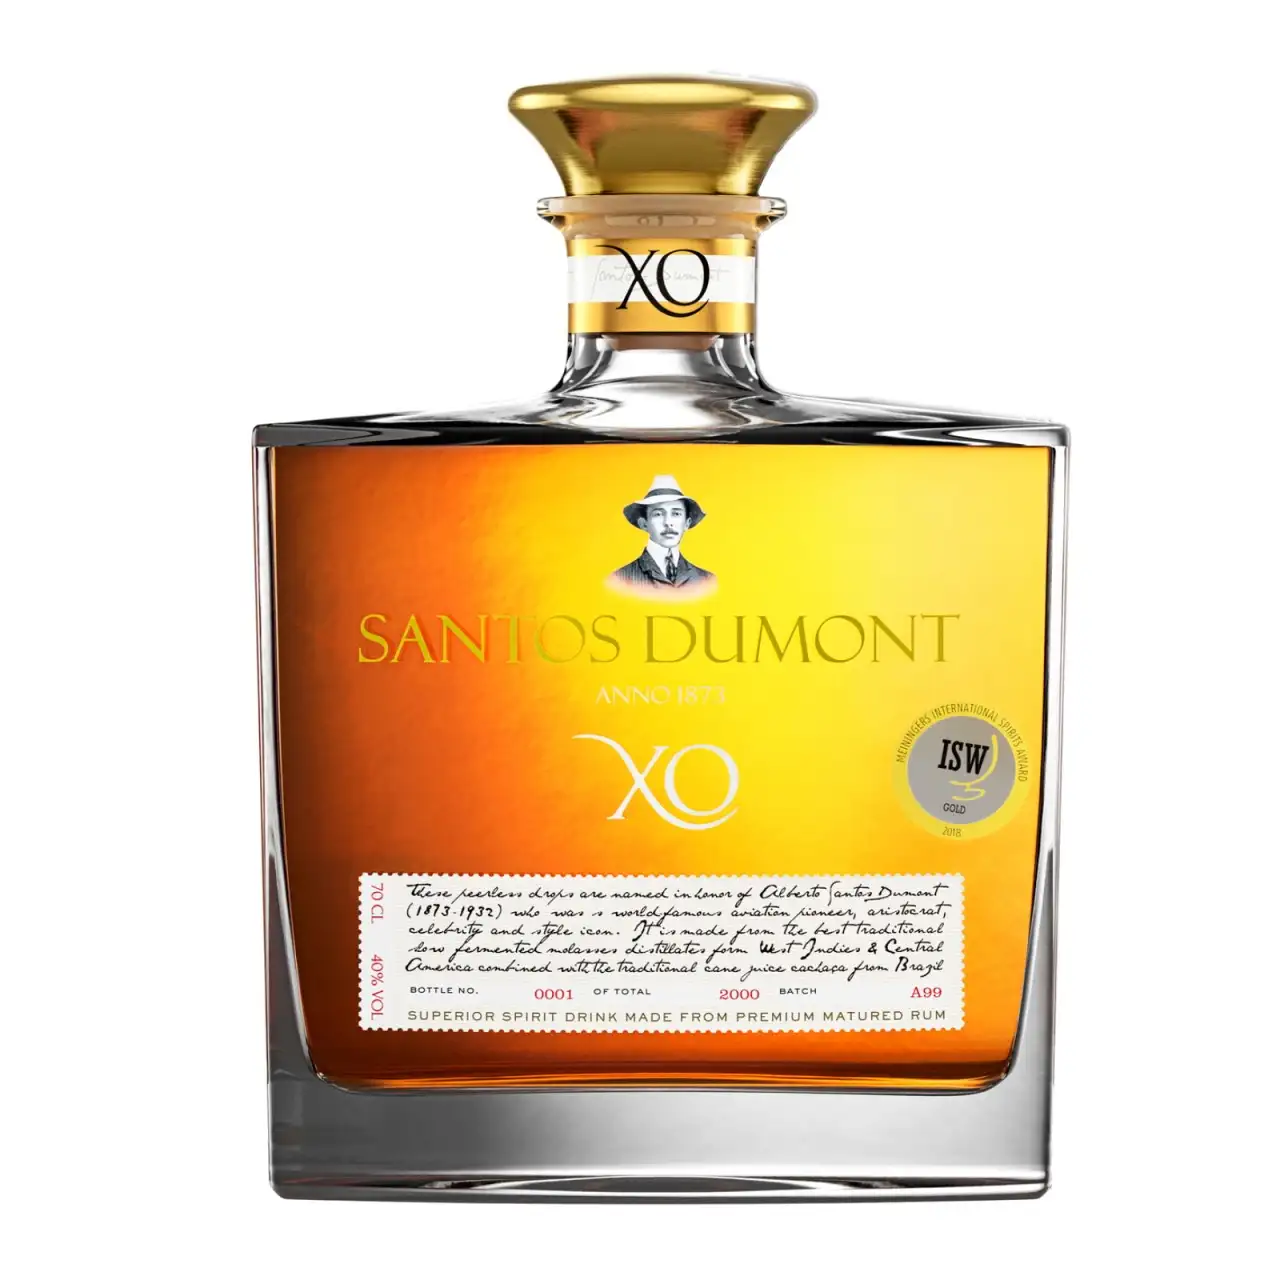 Image of the front of the bottle of the rum Santos Dumont XO Super Premium Rum